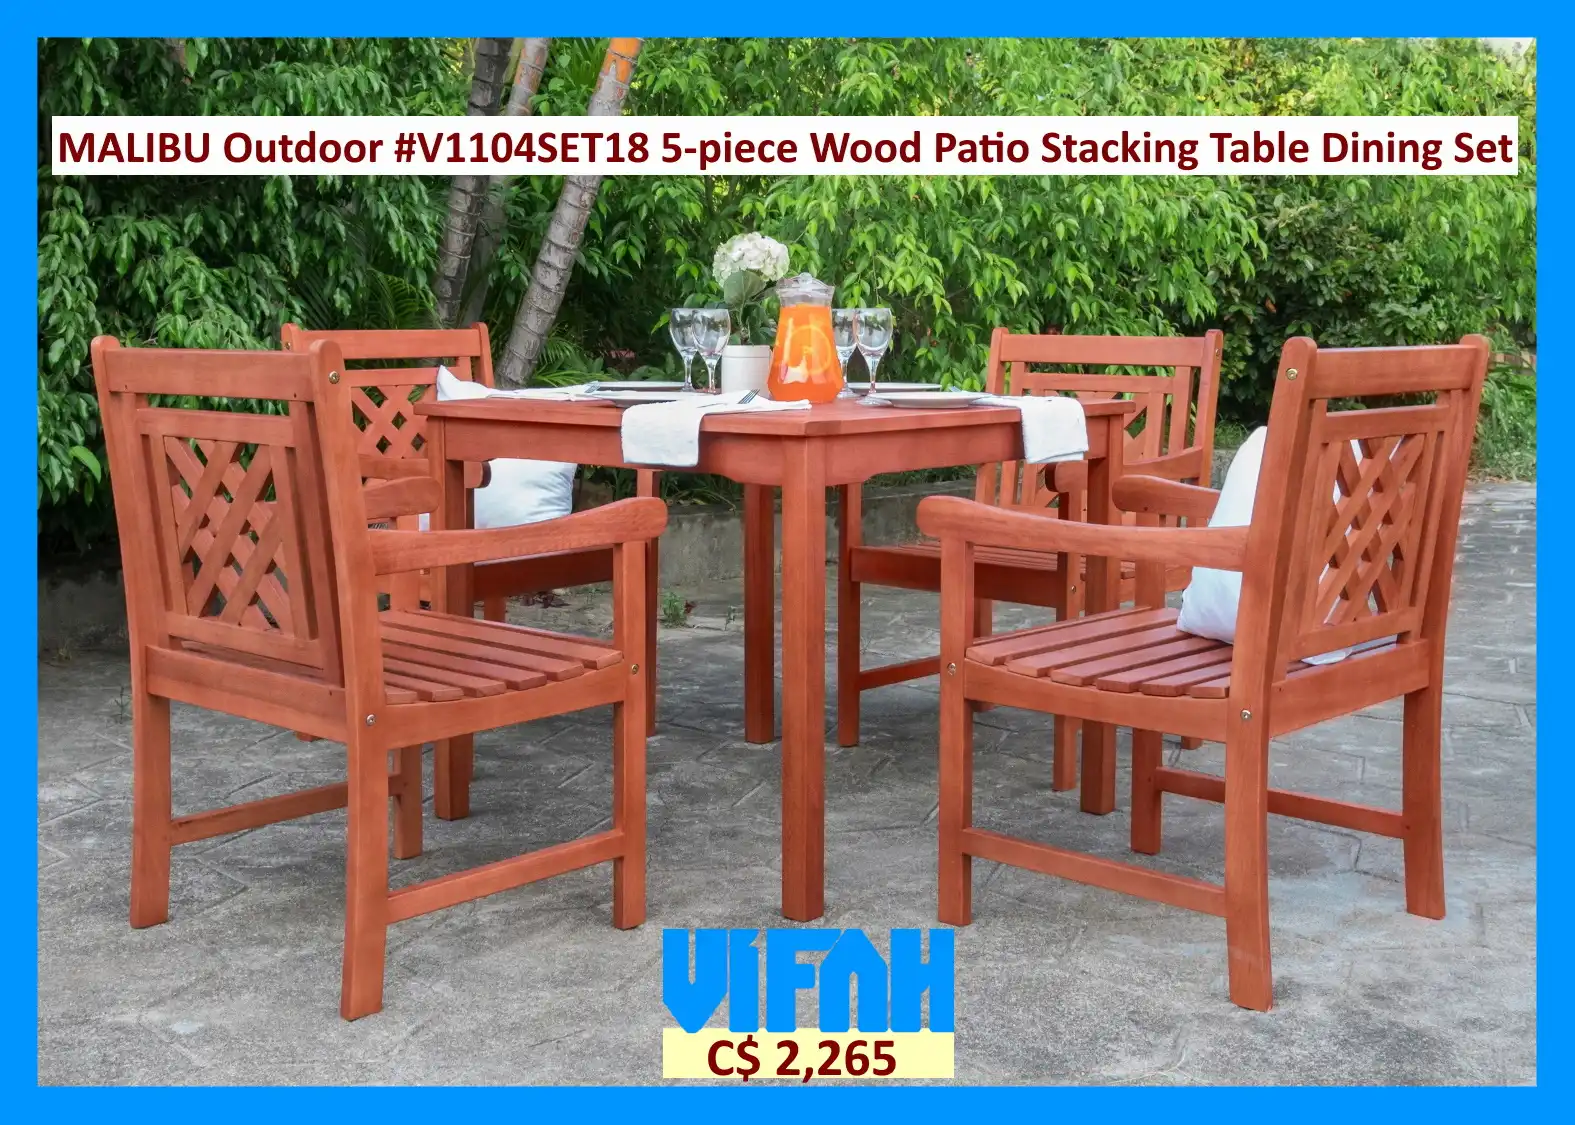 MALIBU Outdoor #V1104SET18 5-piece Wood Patio Stacking Table Dining Set